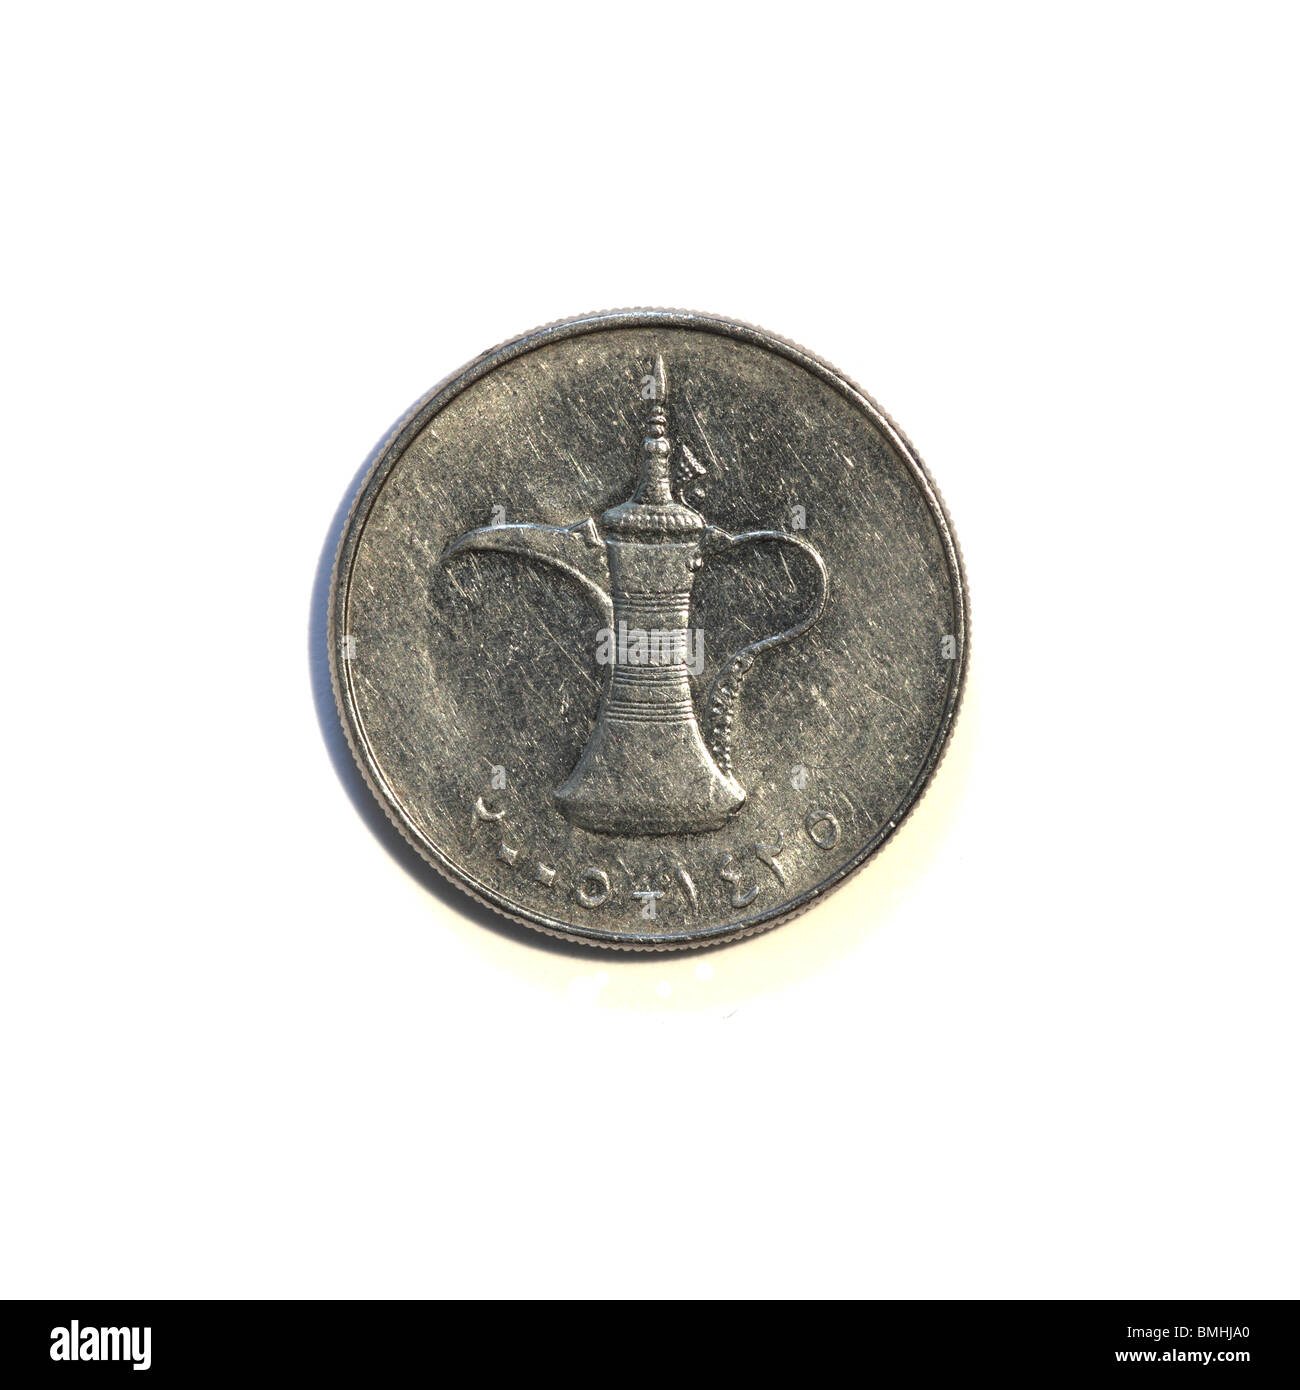 Dubai dirham coin Stock Photo - Alamy